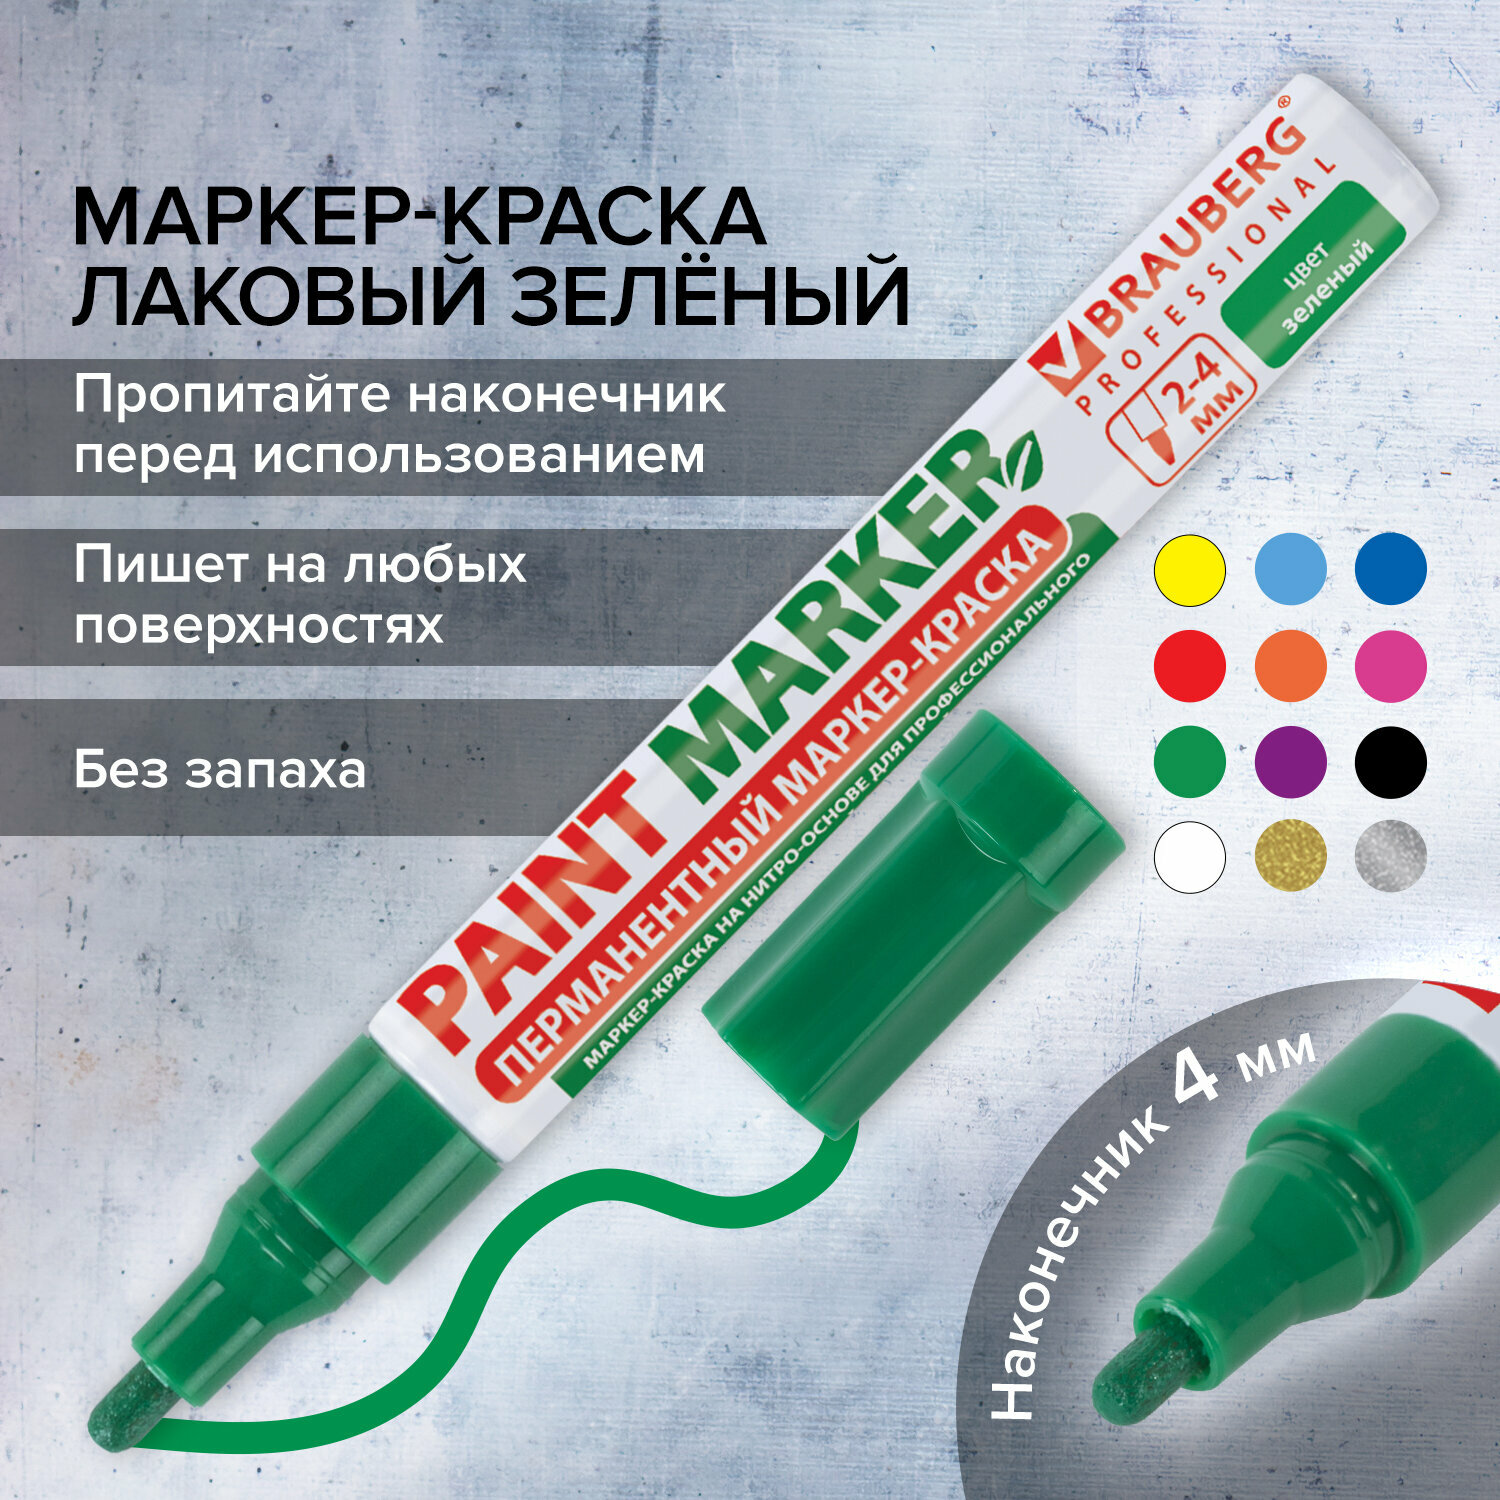 Маркер-краска лаковый paint marker по стеклу / бетону / авто 4 мм, Зеленый, Без Ксилола (без запаха), алюминий, Brauberg Professional, 150879